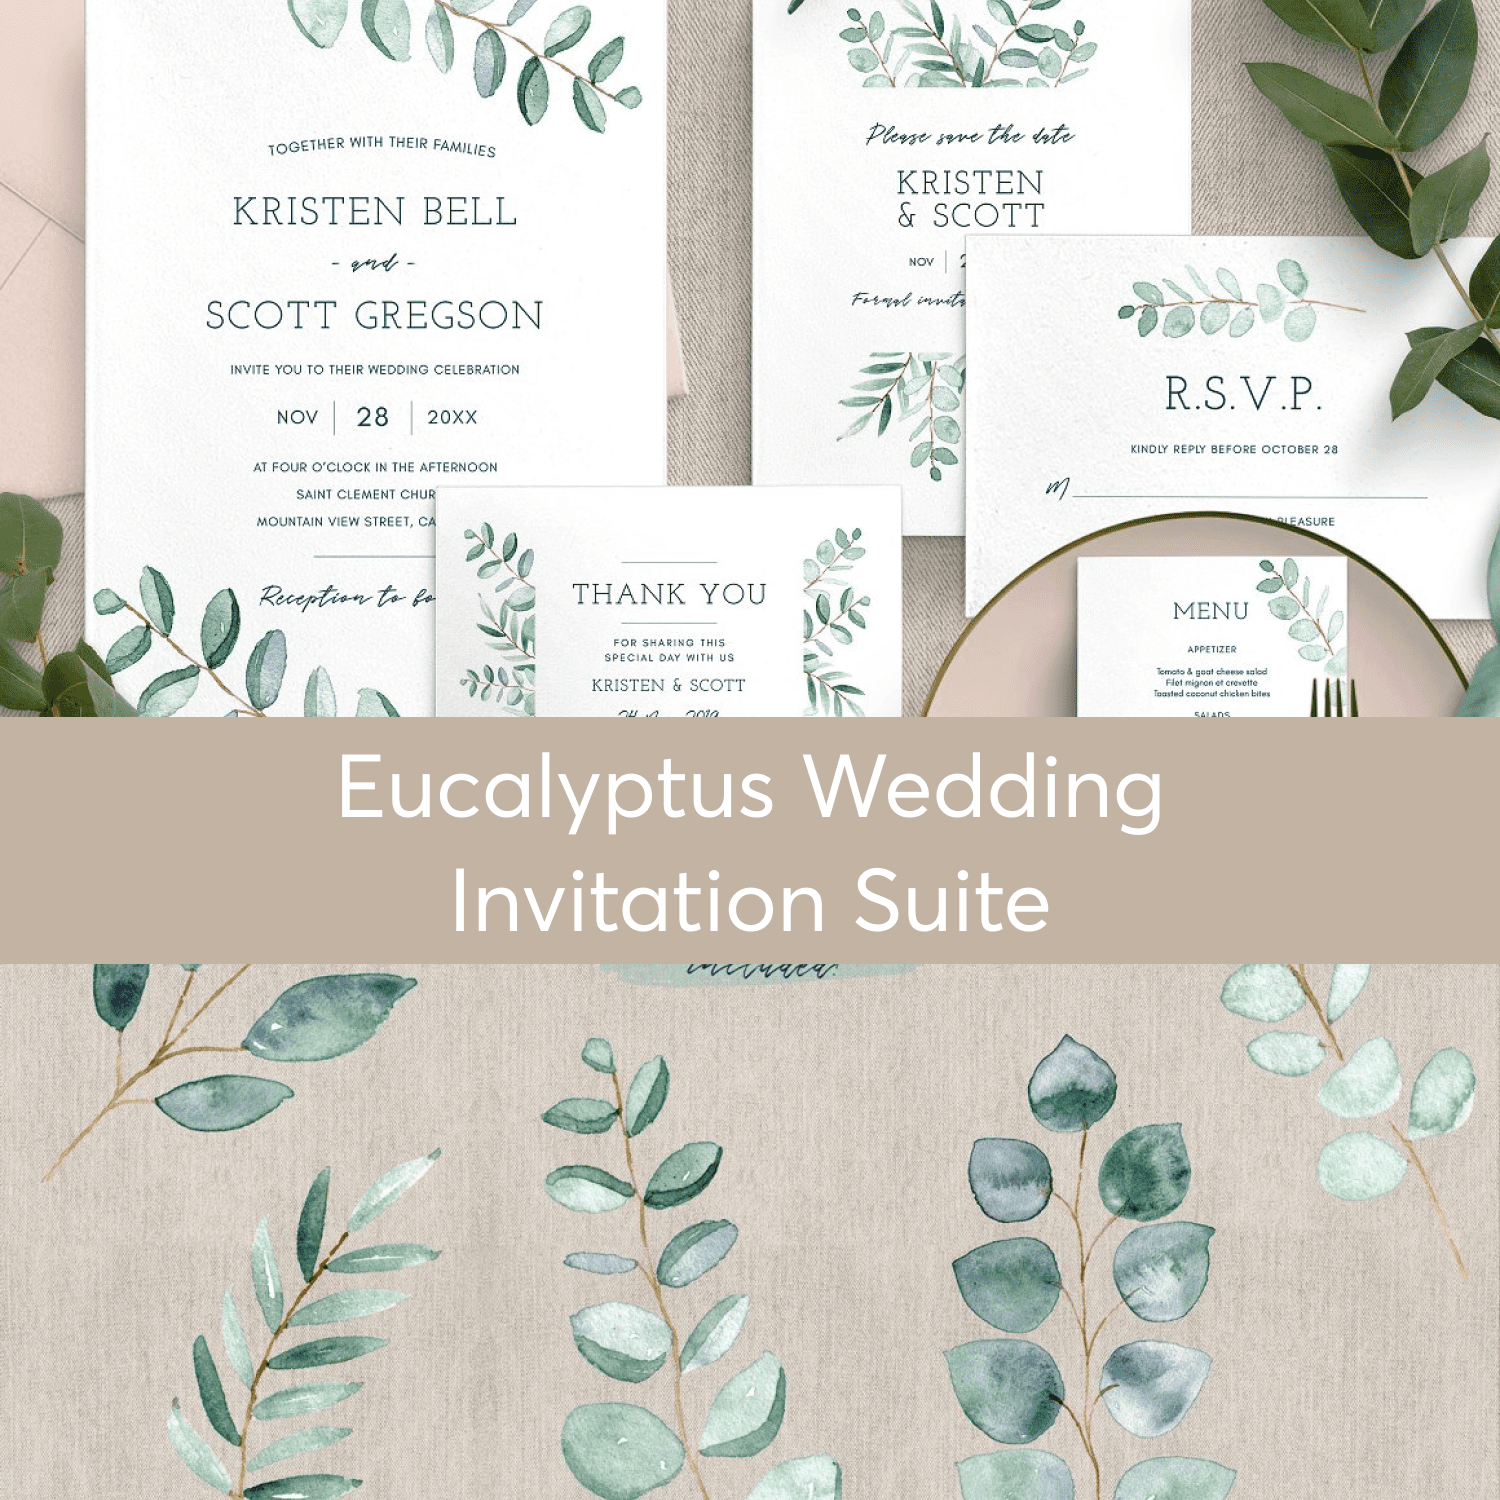 Eucalyptus Wedding Invitation Suite preview image.